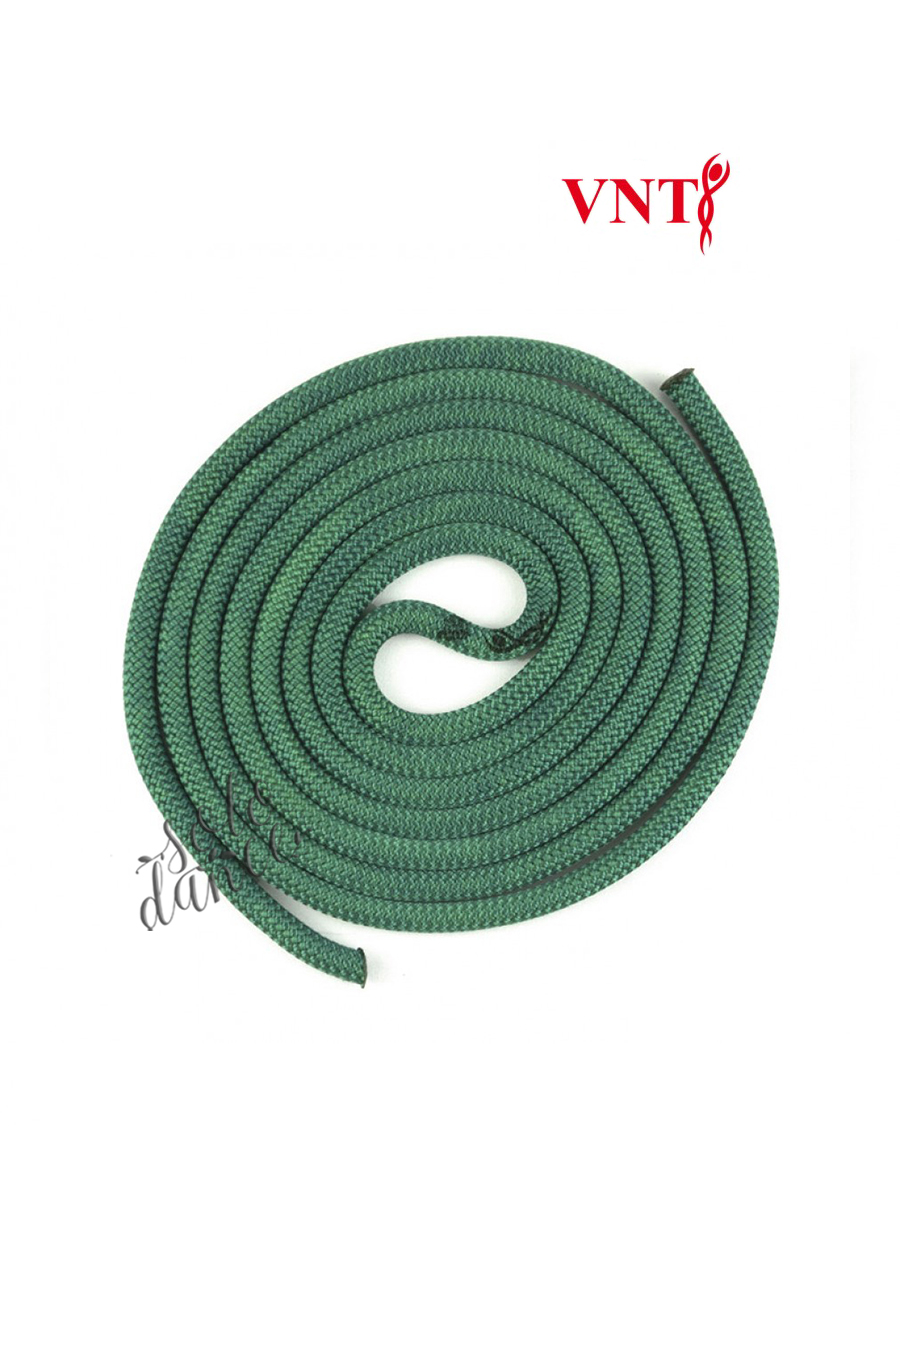 Rope Venturelli for rythmic gymnastic PL2-213 Dark Green